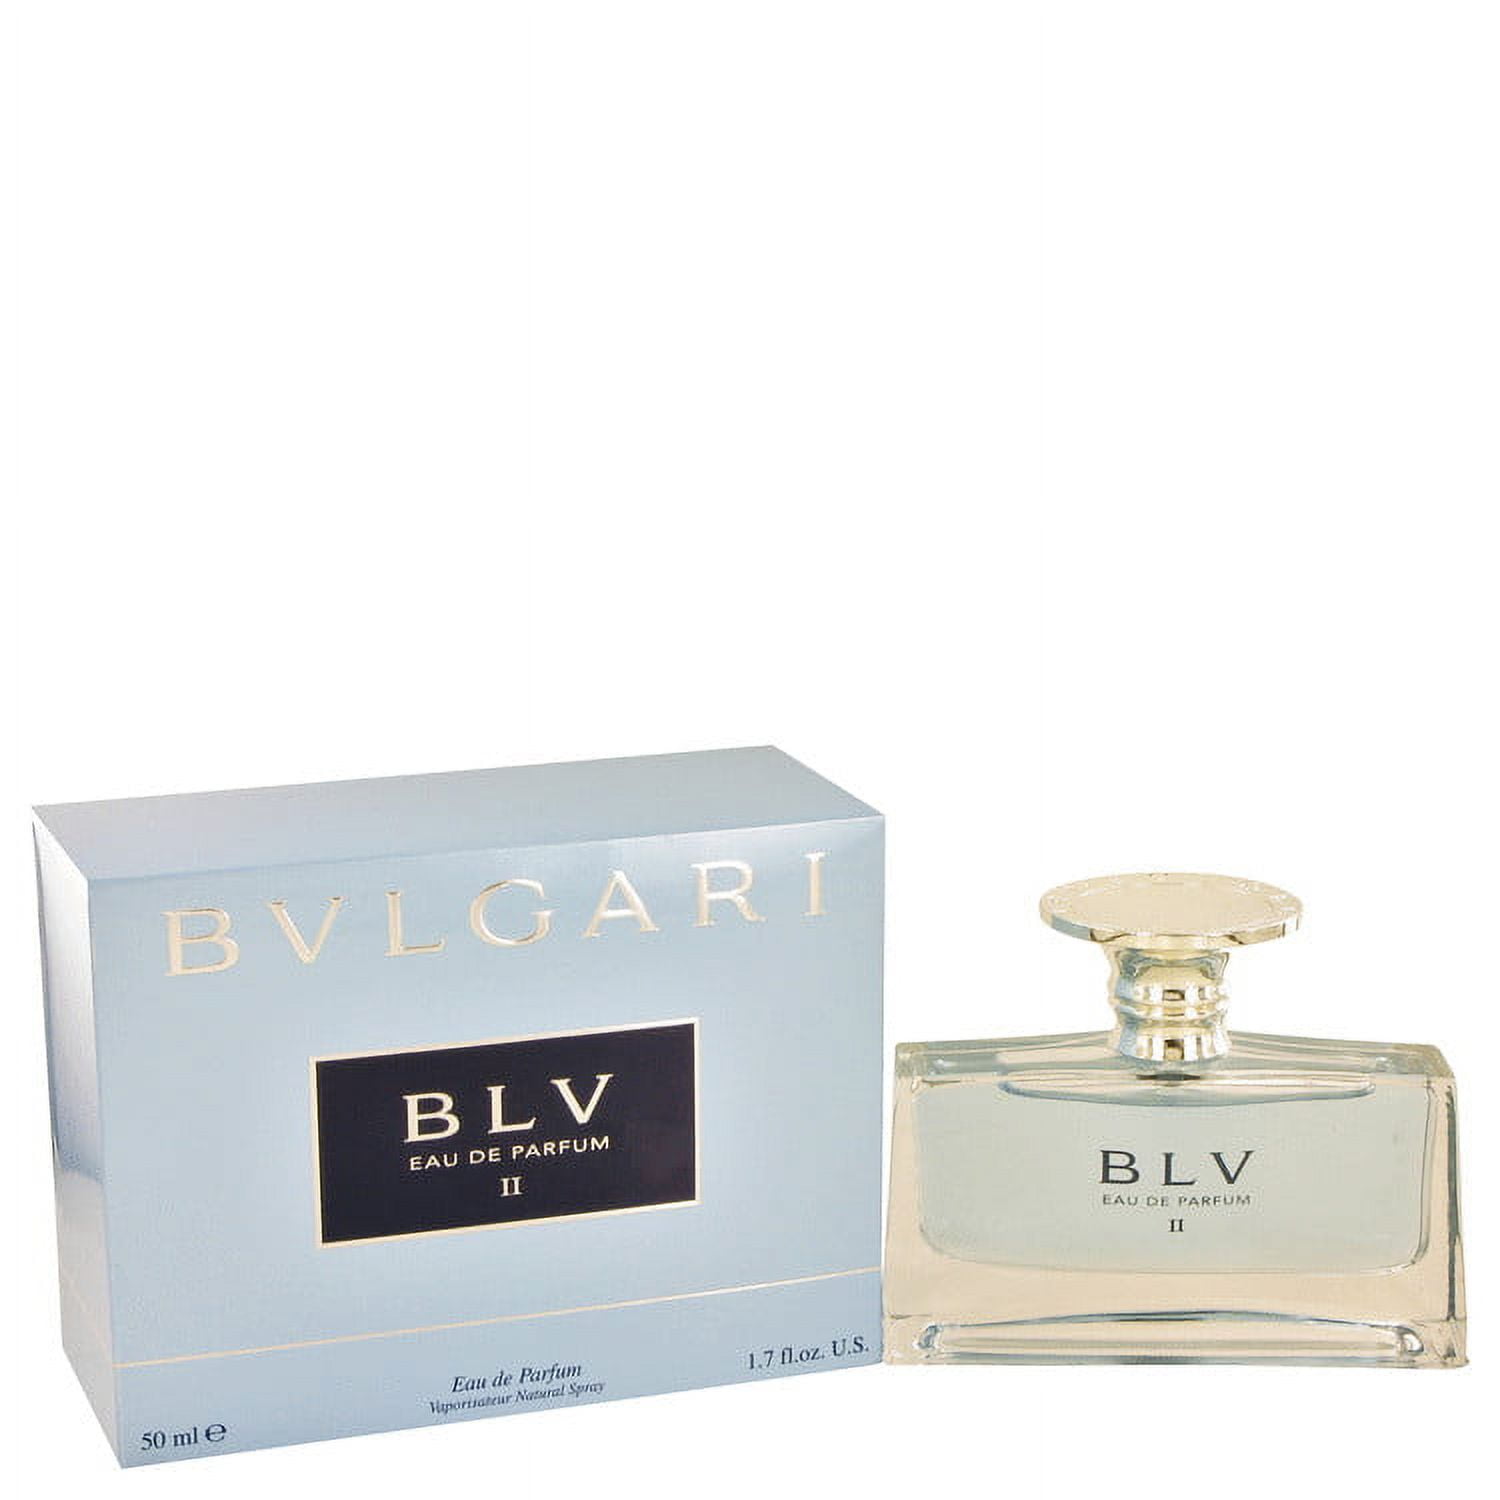 Bvlgari Blv II Eau De Parfum Spray 30ml/1oz buy in United States with free  shipping CosmoStore